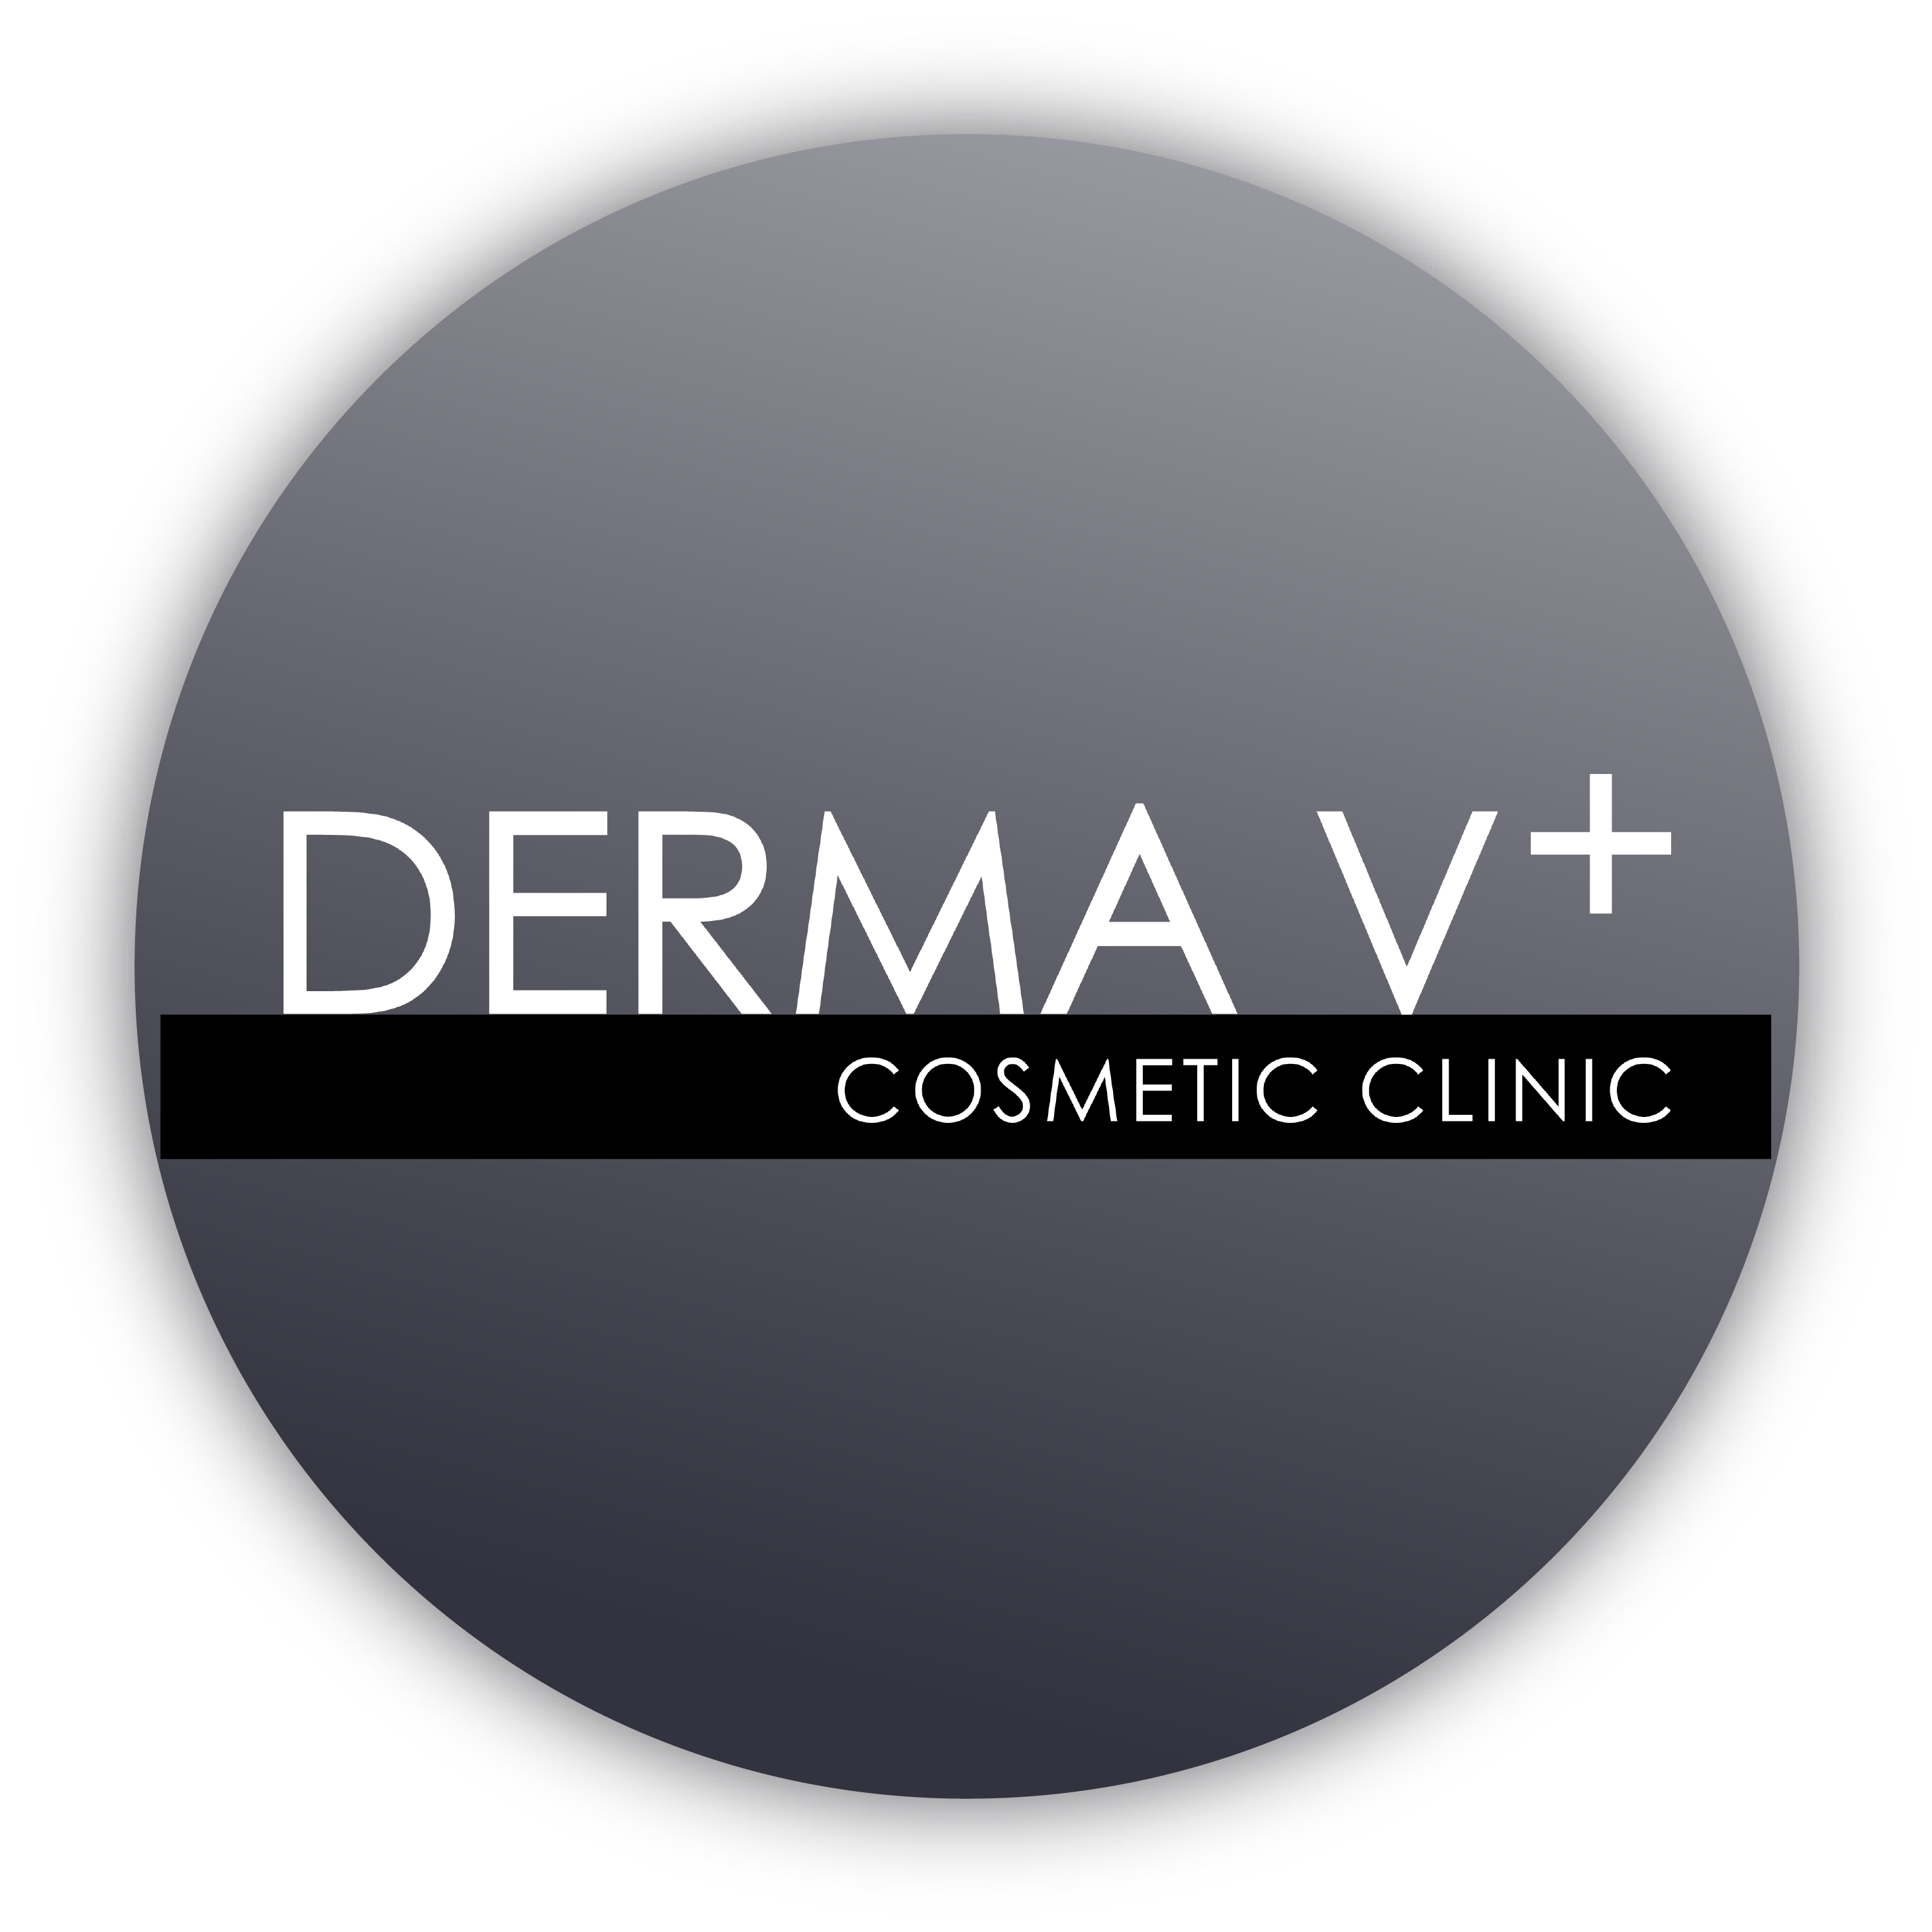 Derma V+ Cosmetic Clinic